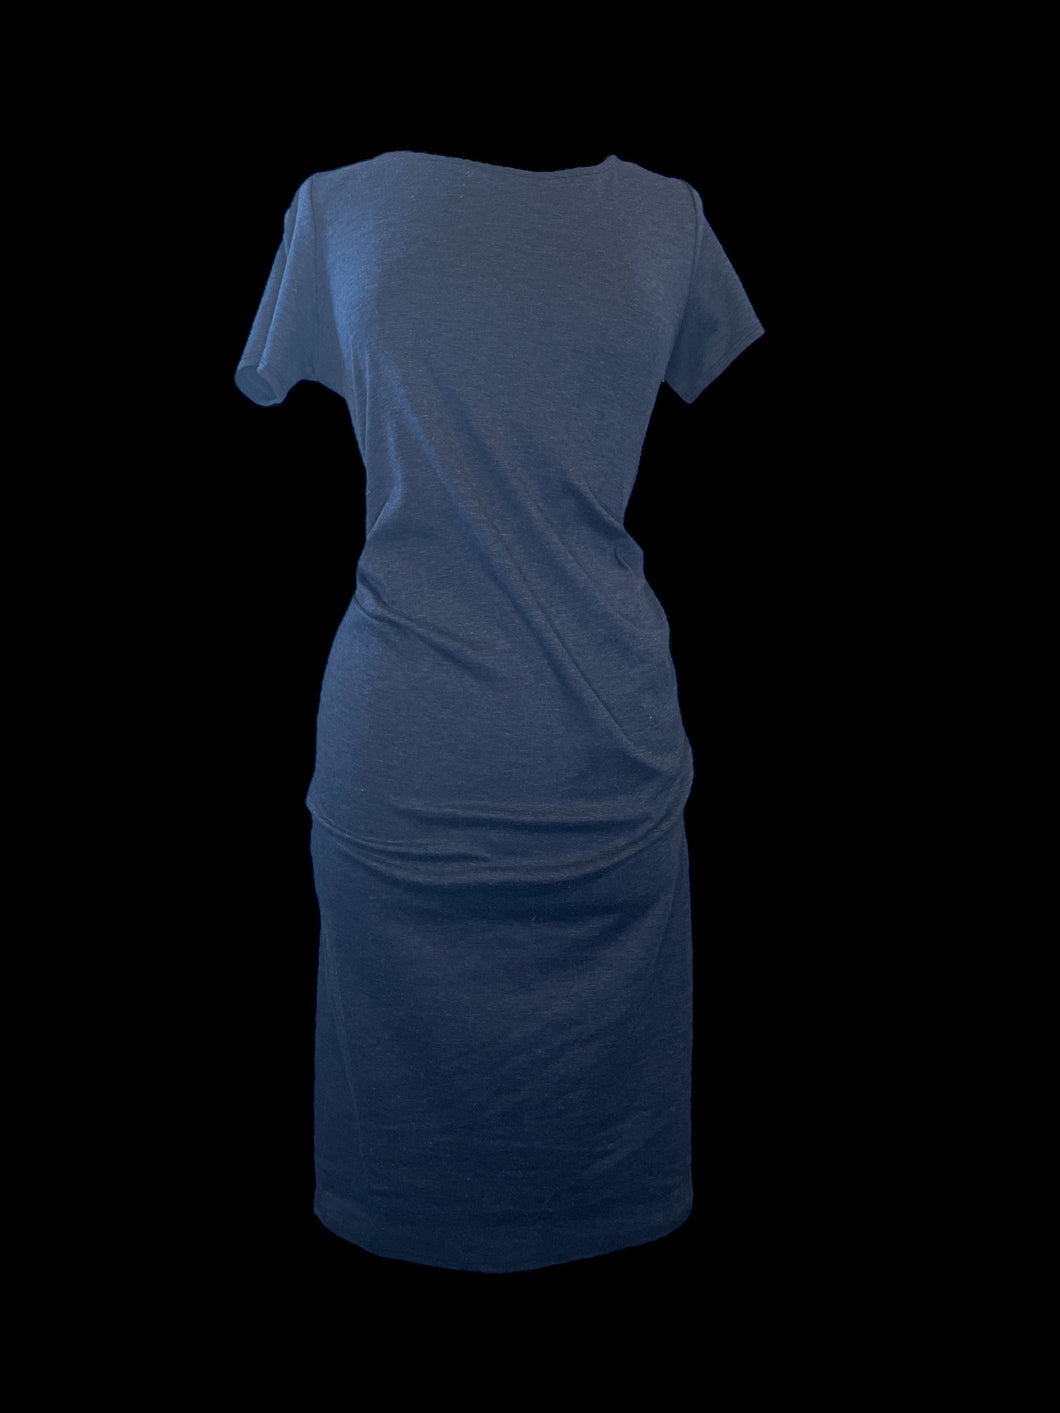 0X Dark blue heathered short sleeve T-shirt dress